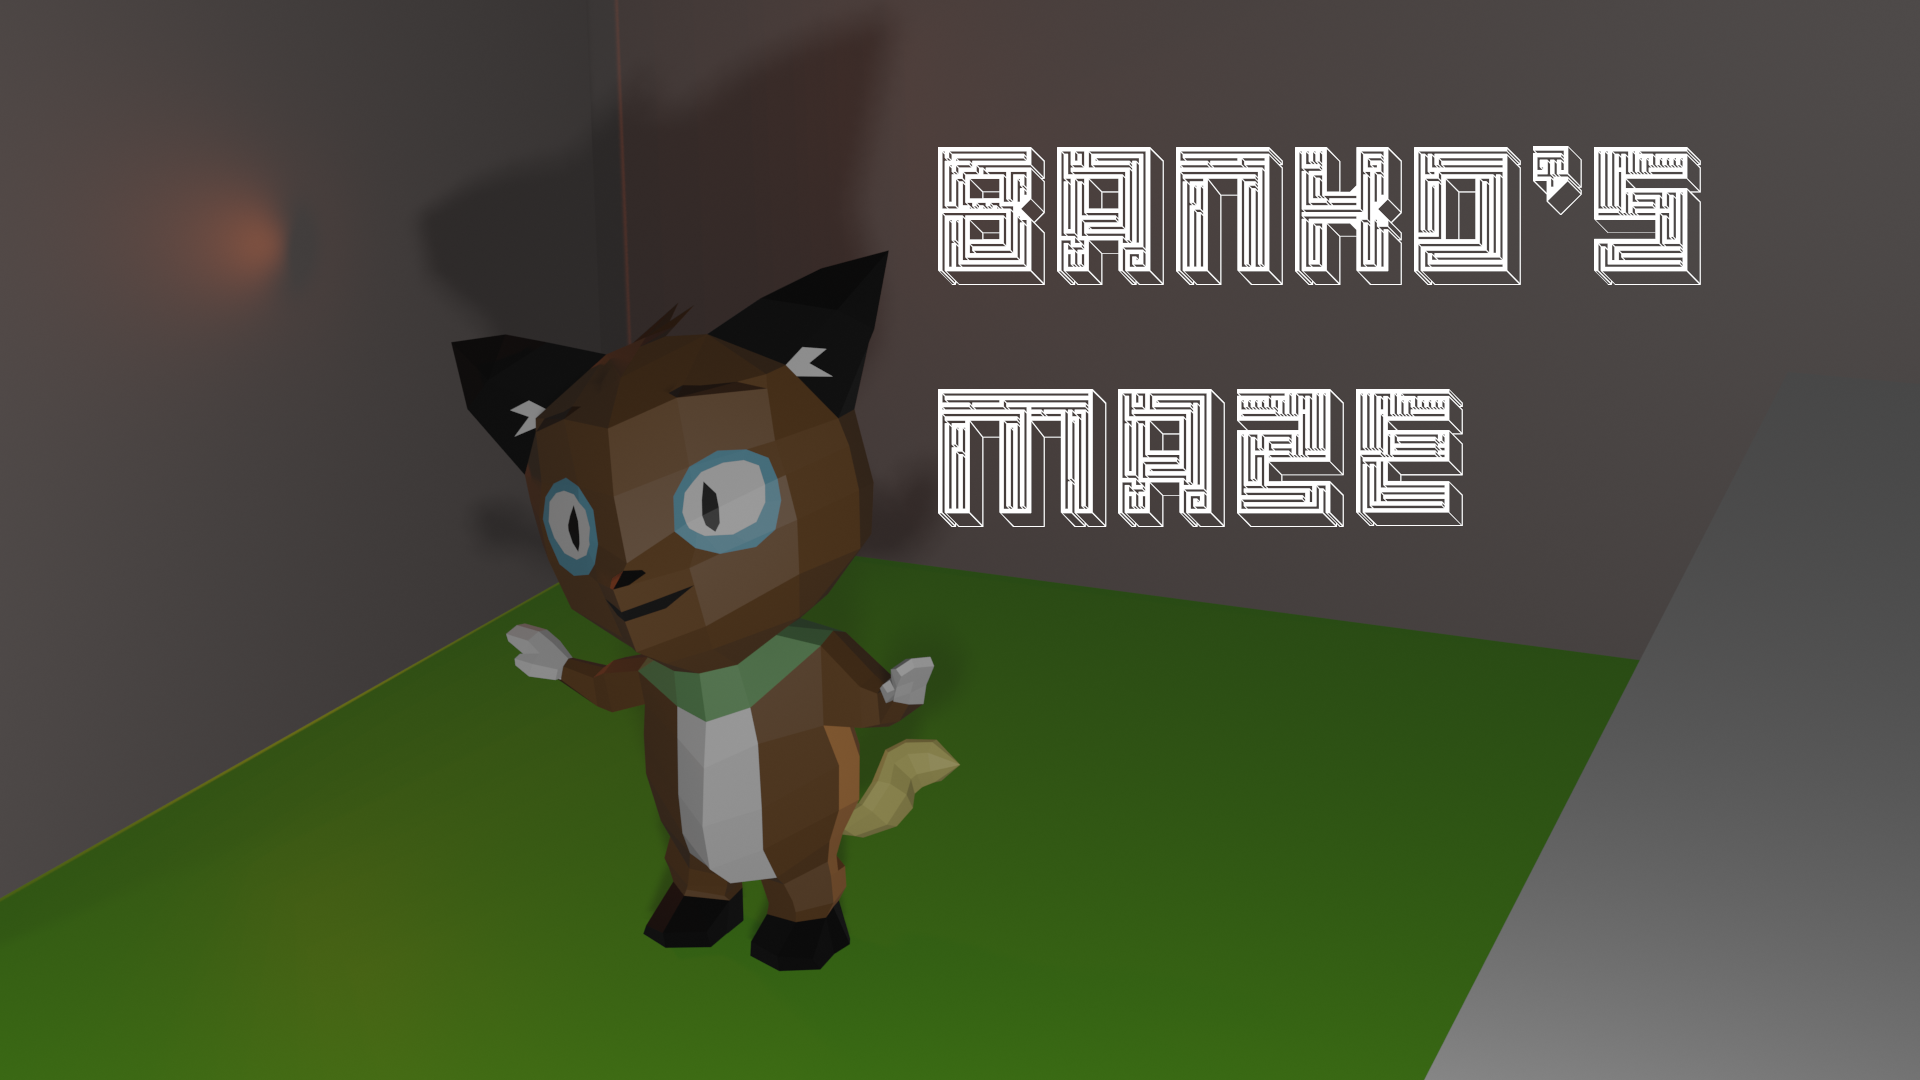 Banko's maze